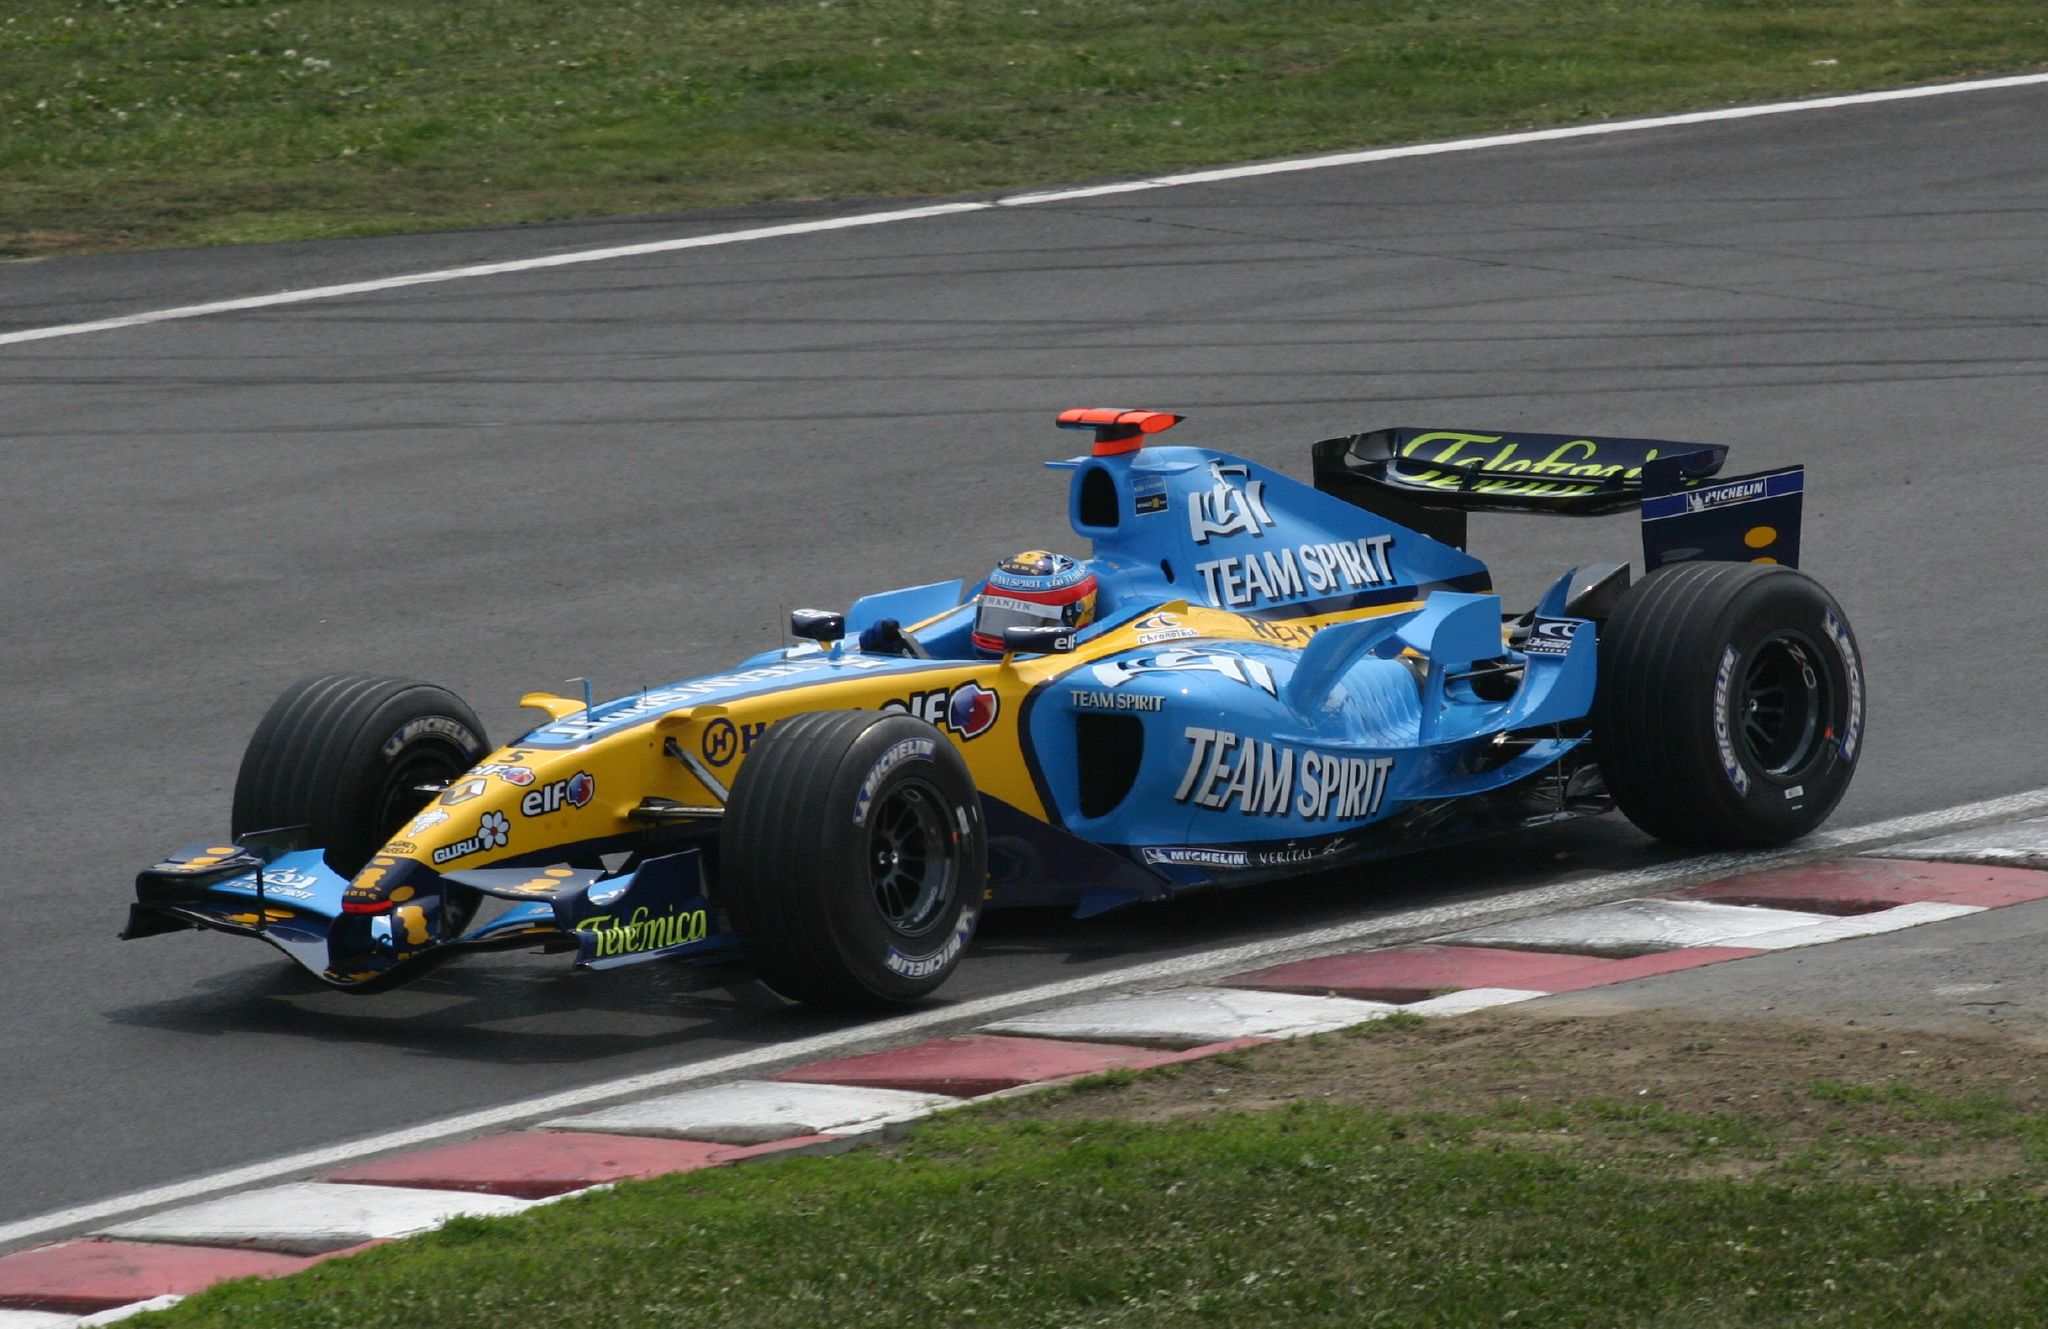 File:Fernando Alonso 2005 Canada.jpg - Wikimedia Commons